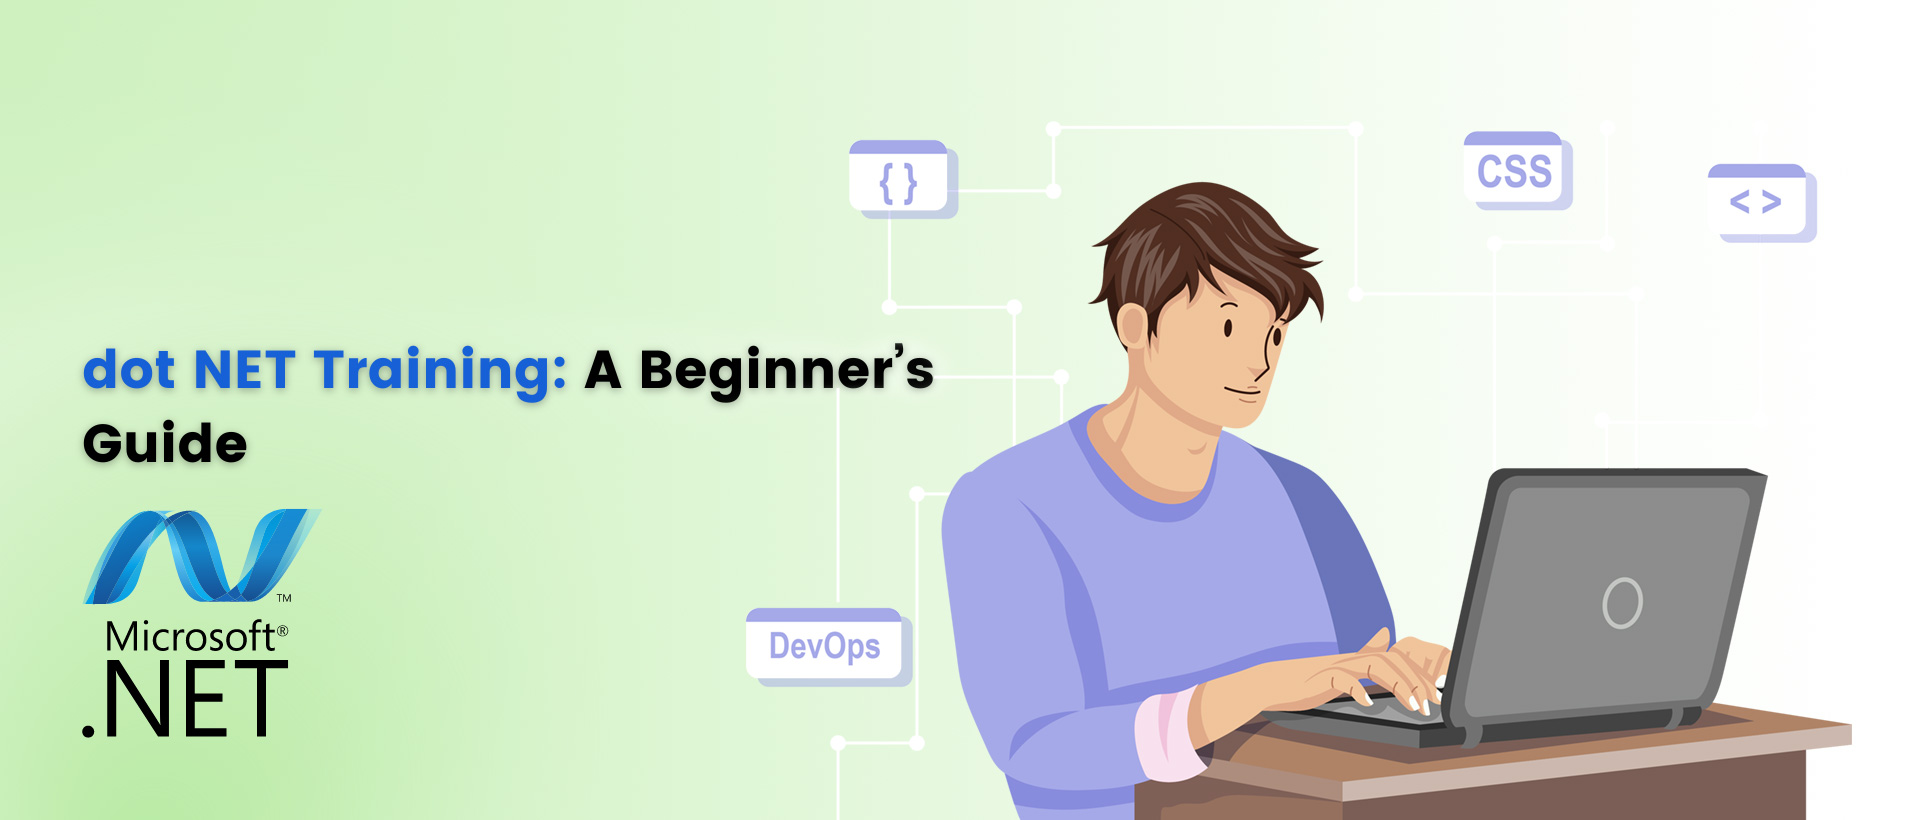 Dot NET Training: A Beginner’s Guide